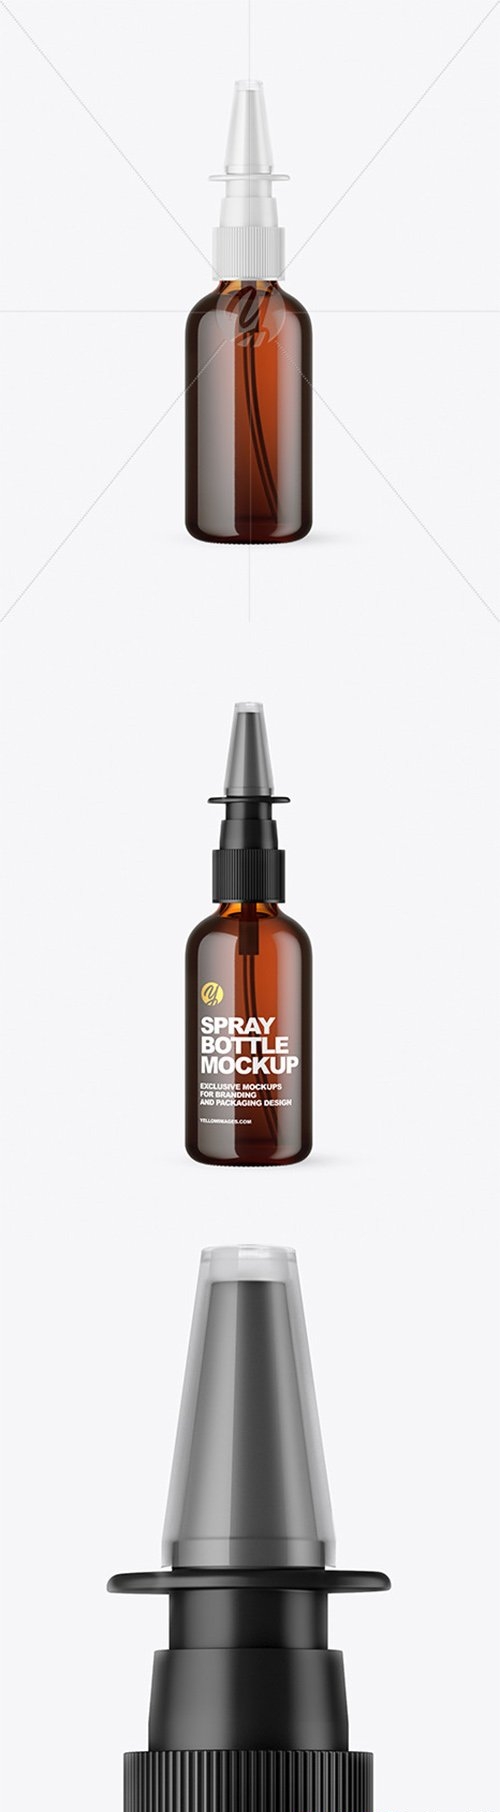 Amber Glass Nasal Spray Bottle Mockup 66515